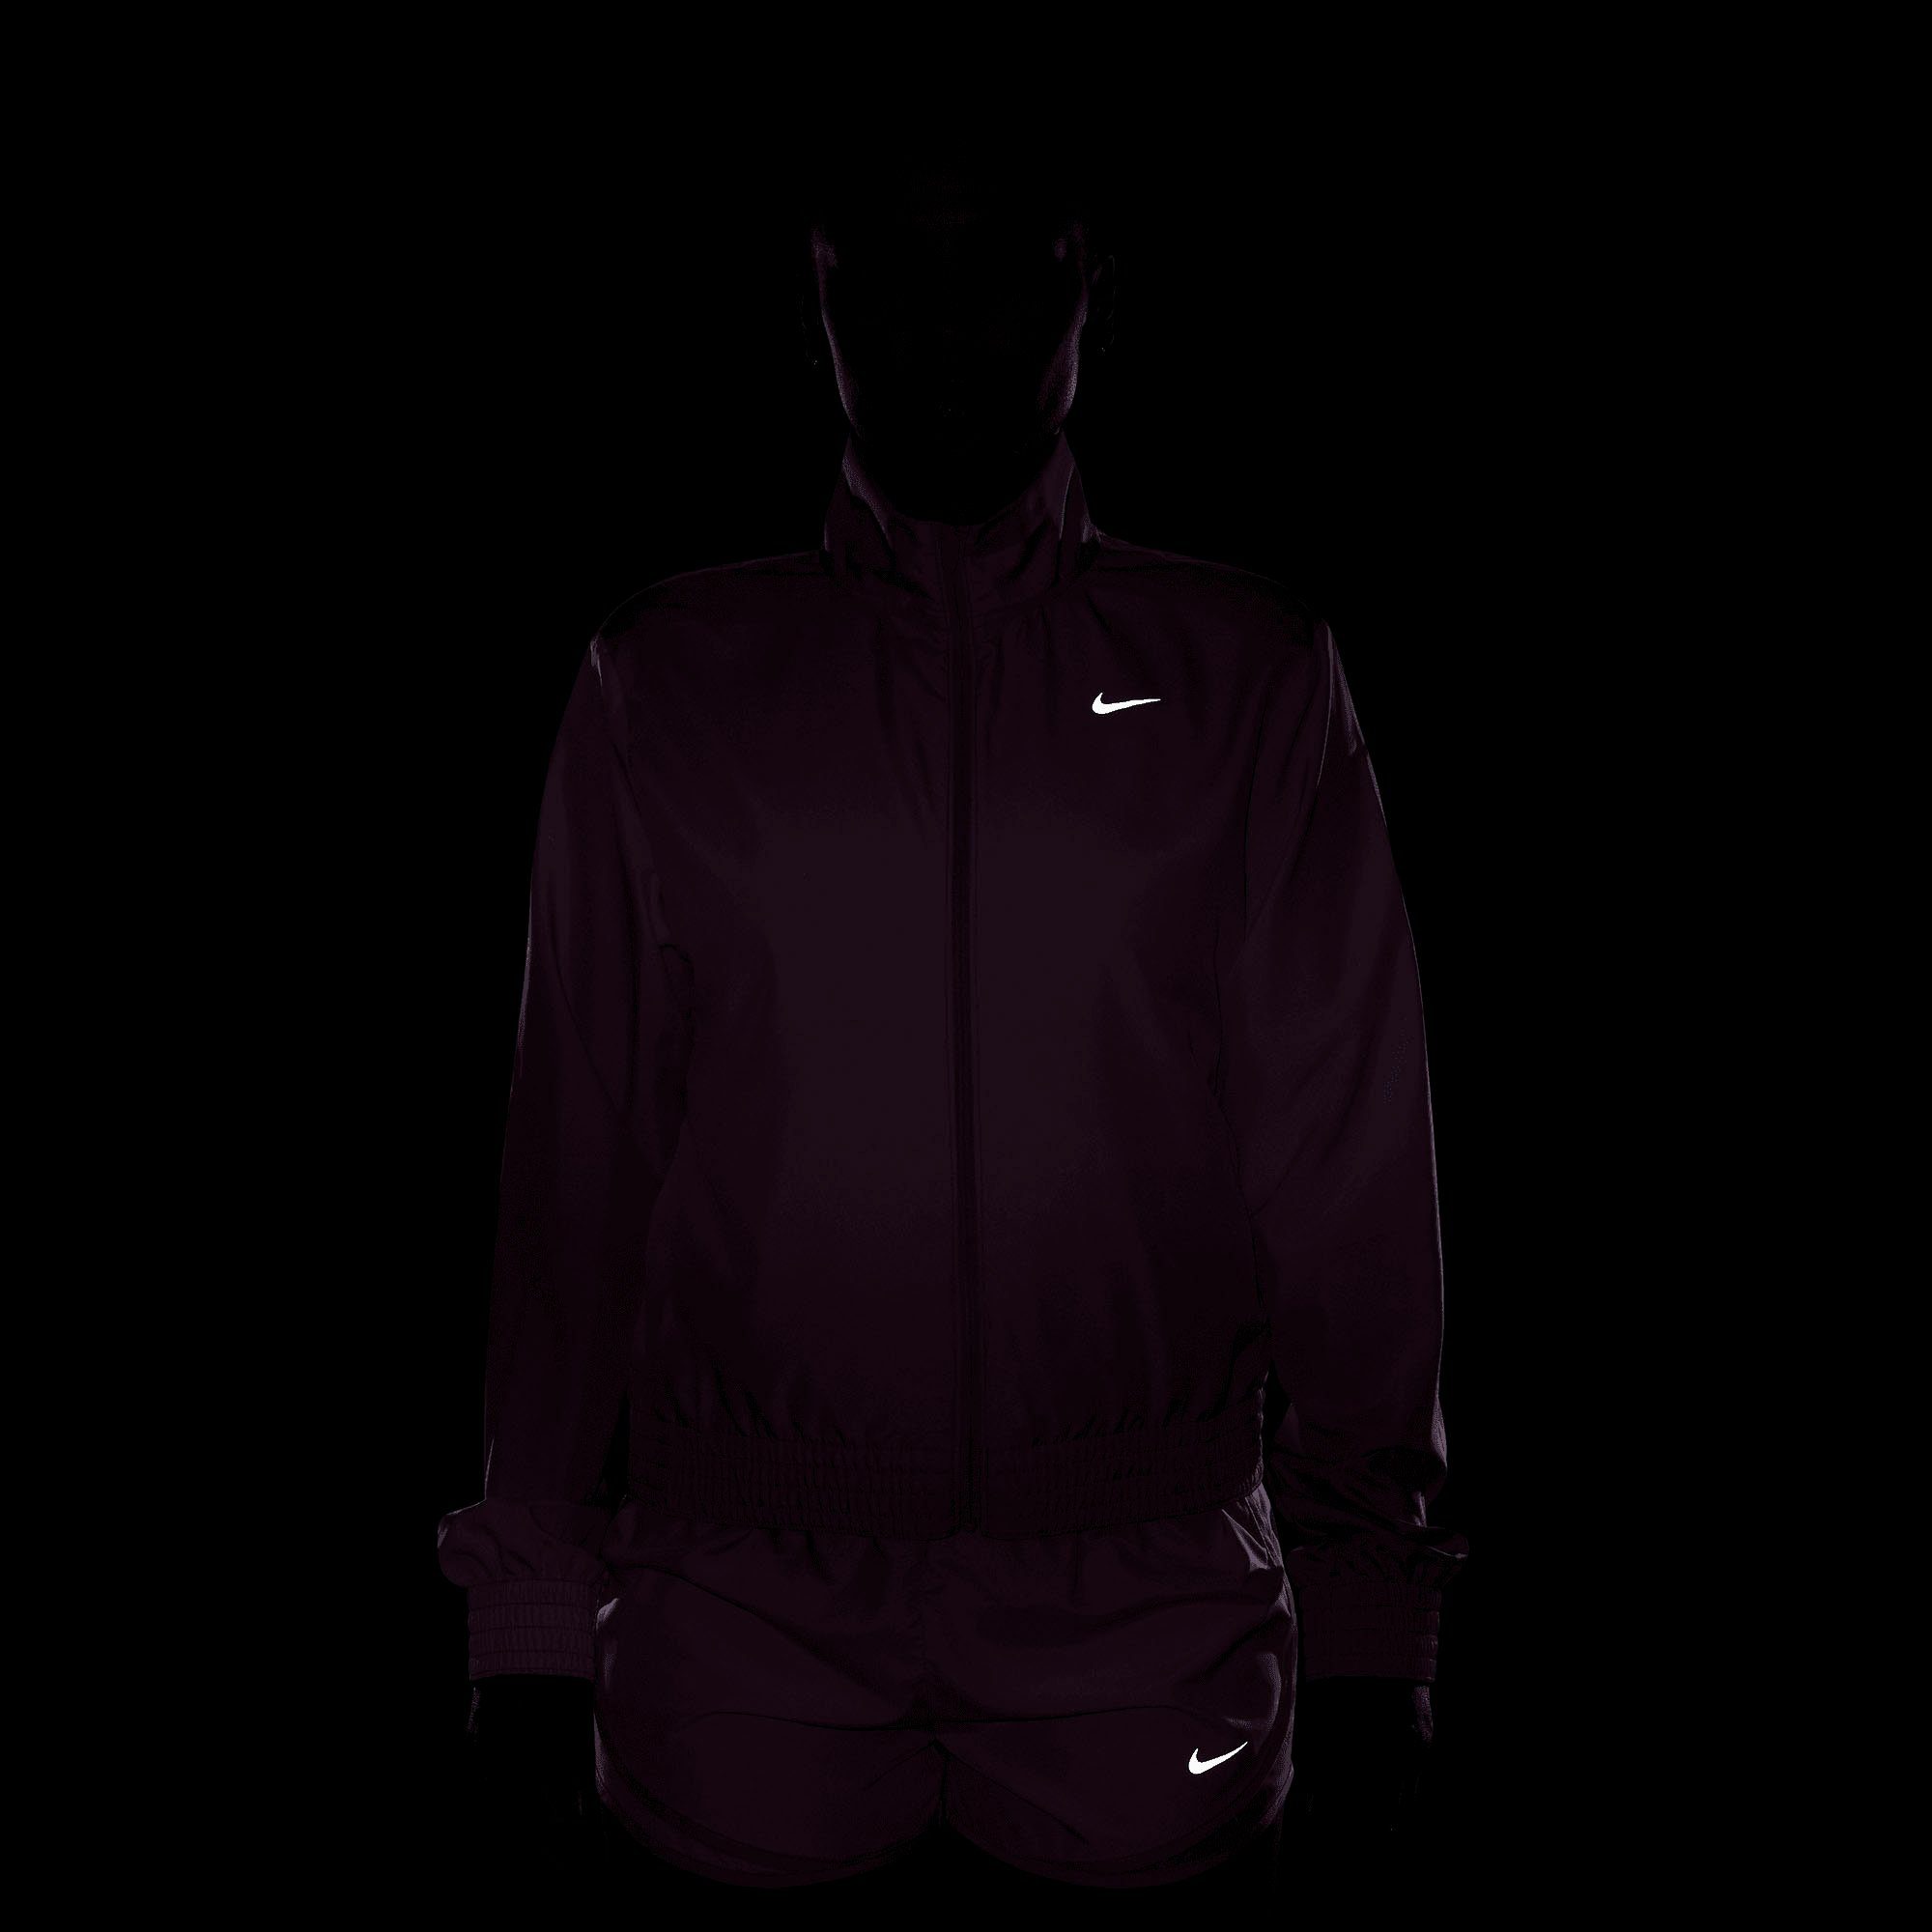 Swoosh Nike FUCHSIA/REFLECTIVE Laufjacke Jacket Running Run Printed ACTIVE Women's SILV Dri-FIT